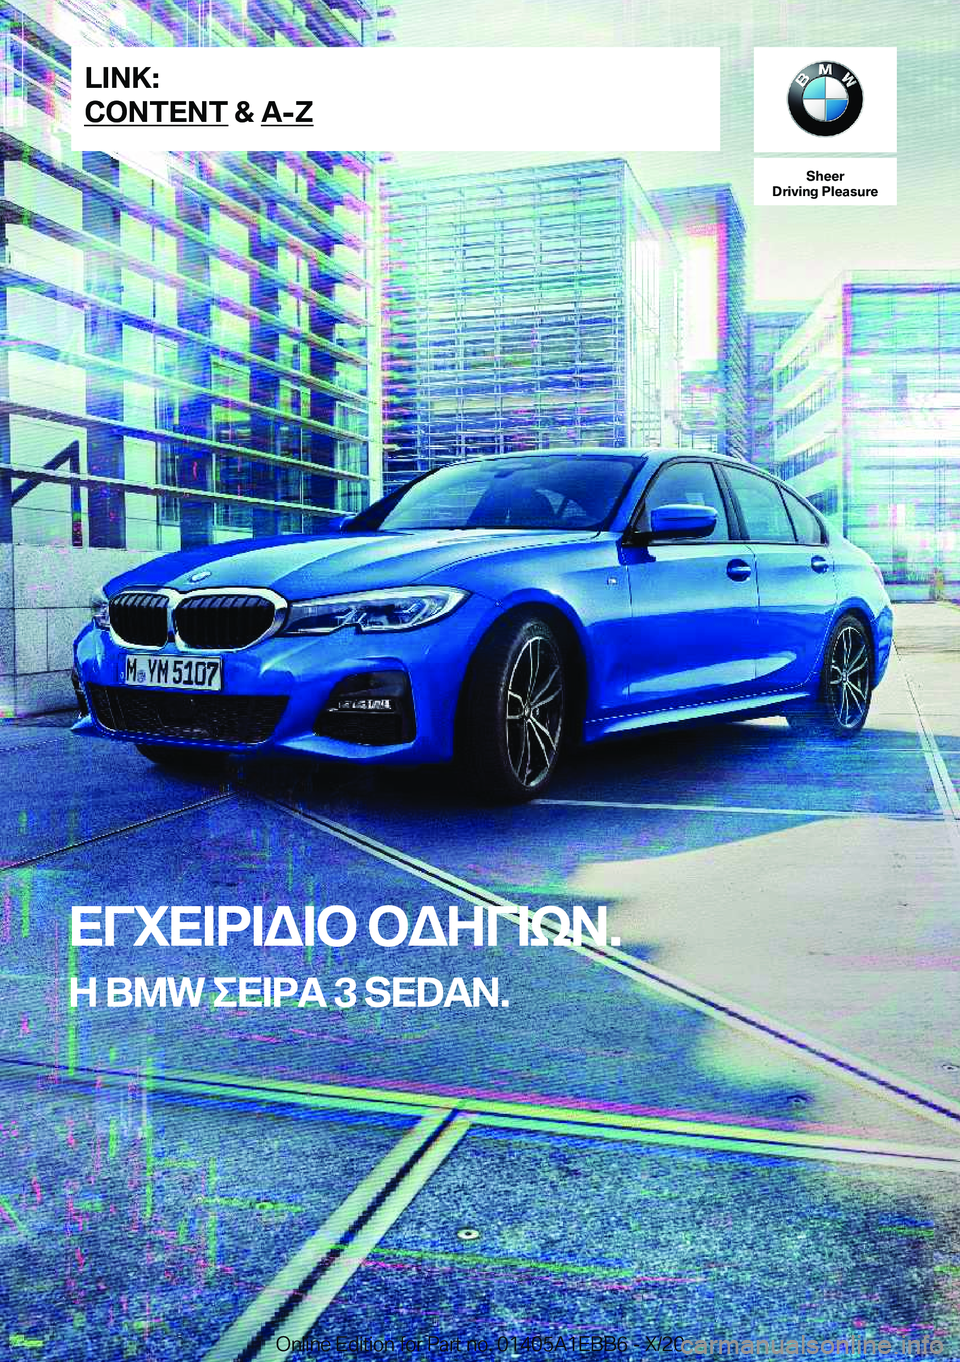 BMW 3 SERIES 2021  ΟΔΗΓΌΣ ΧΡΉΣΗΣ (in Greek) �S�h�e�e�r
�D�r�i�v�i�n�g��P�l�e�a�s�u�r�e
XViX=d=W=b�bWZV=kA�.
�H��B�M�W�eX=dT��3��S�E�D�A�N�.�L�I�N�K�:
�C�O�N�T�E�N�T��&��A�-�Z�O�n�l�i�n�e��E�d�i�t�i�o�n��f�o�r��P